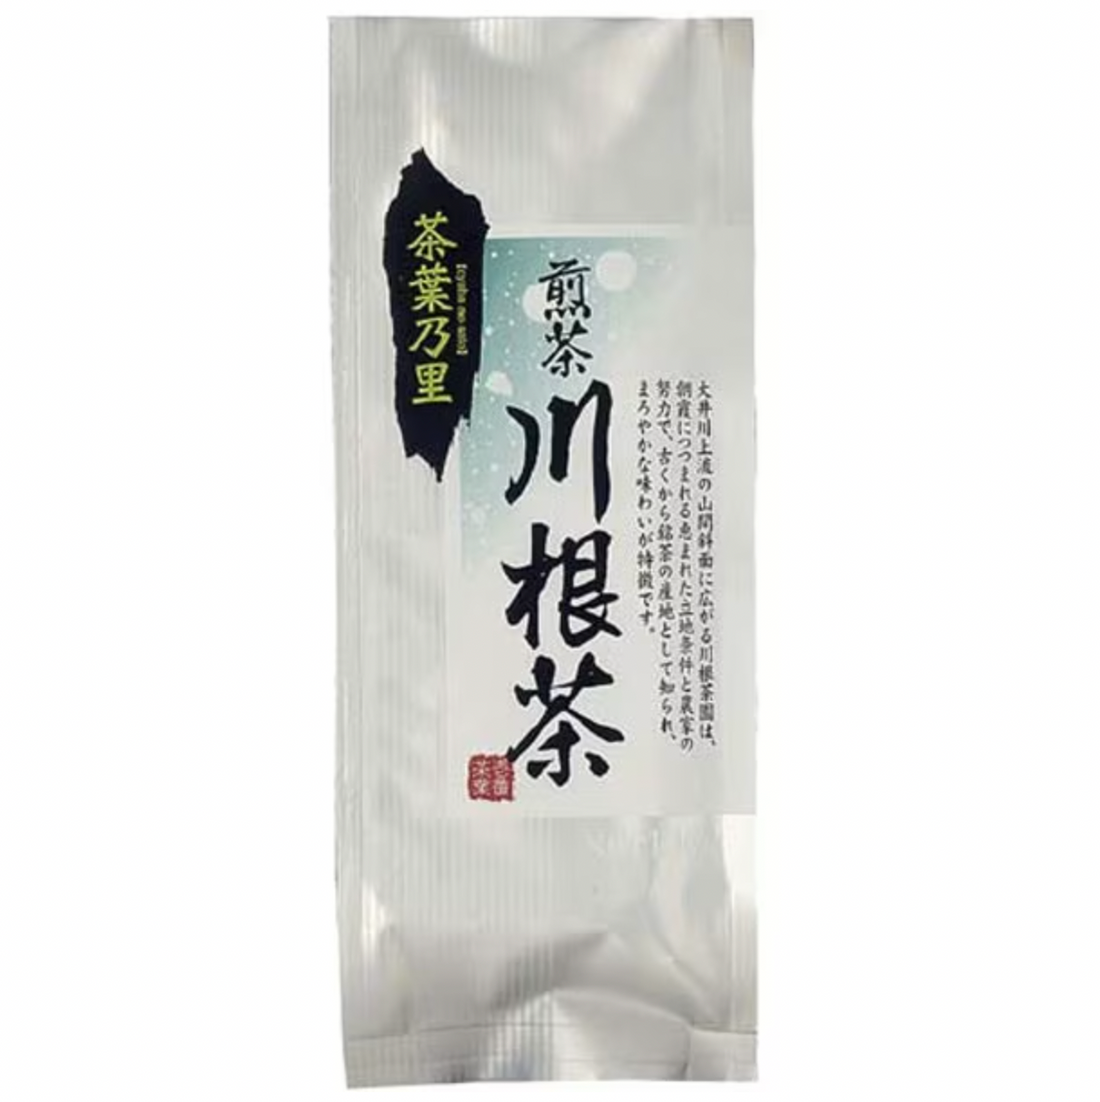 Ochanomaruko Chaha Nosato Shizuoka Kawane Tea 100g